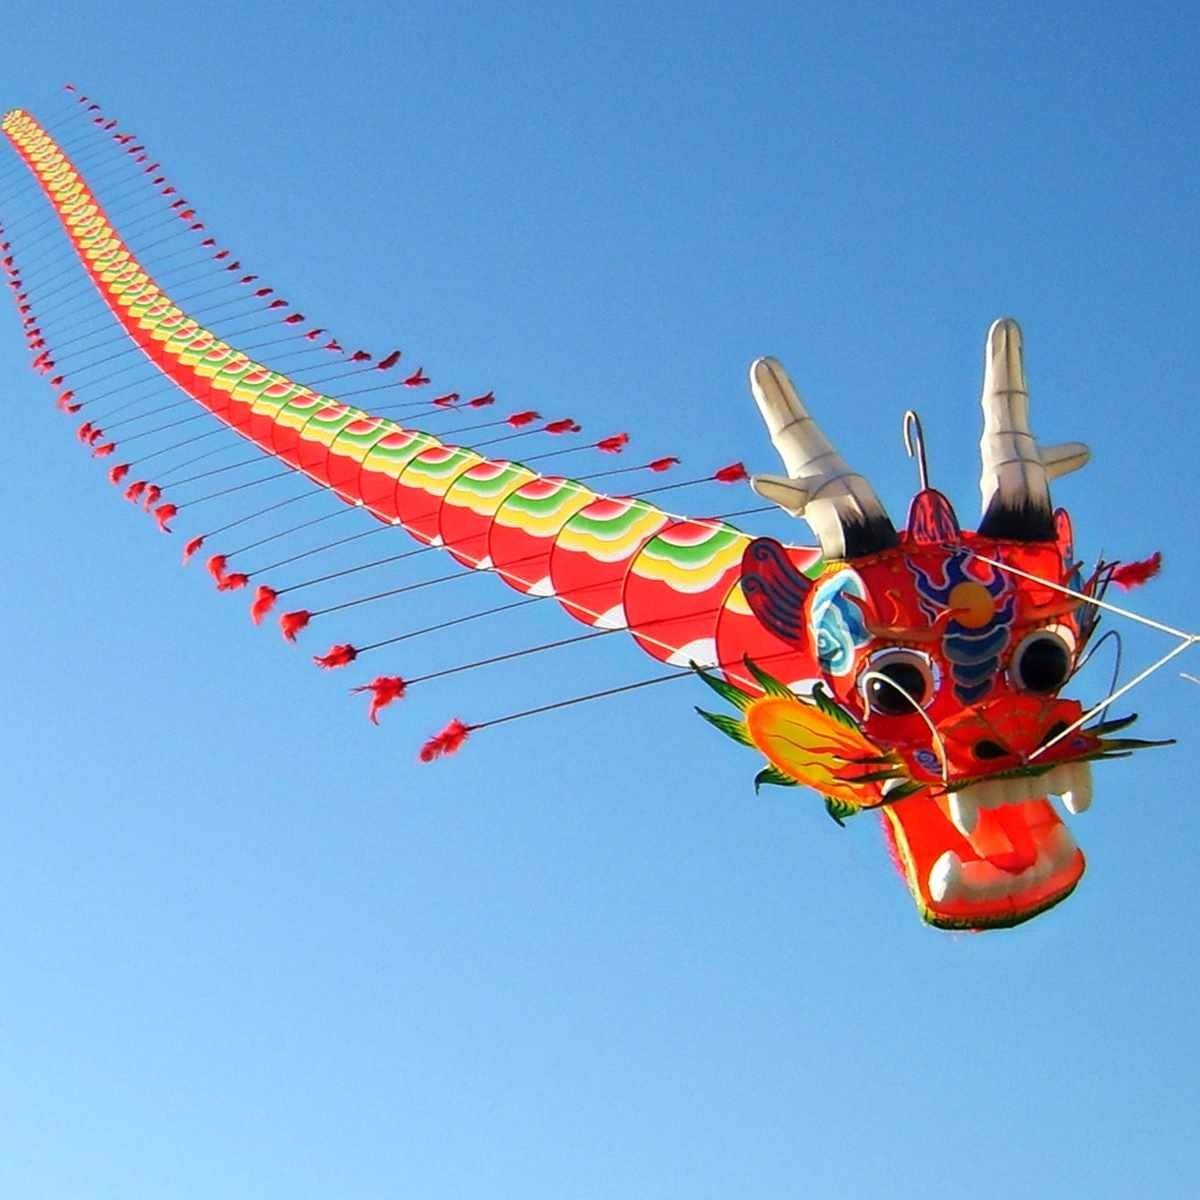 Chinese Kite, Chinese Kite Festival, Weifang Kite, China Kite Tour